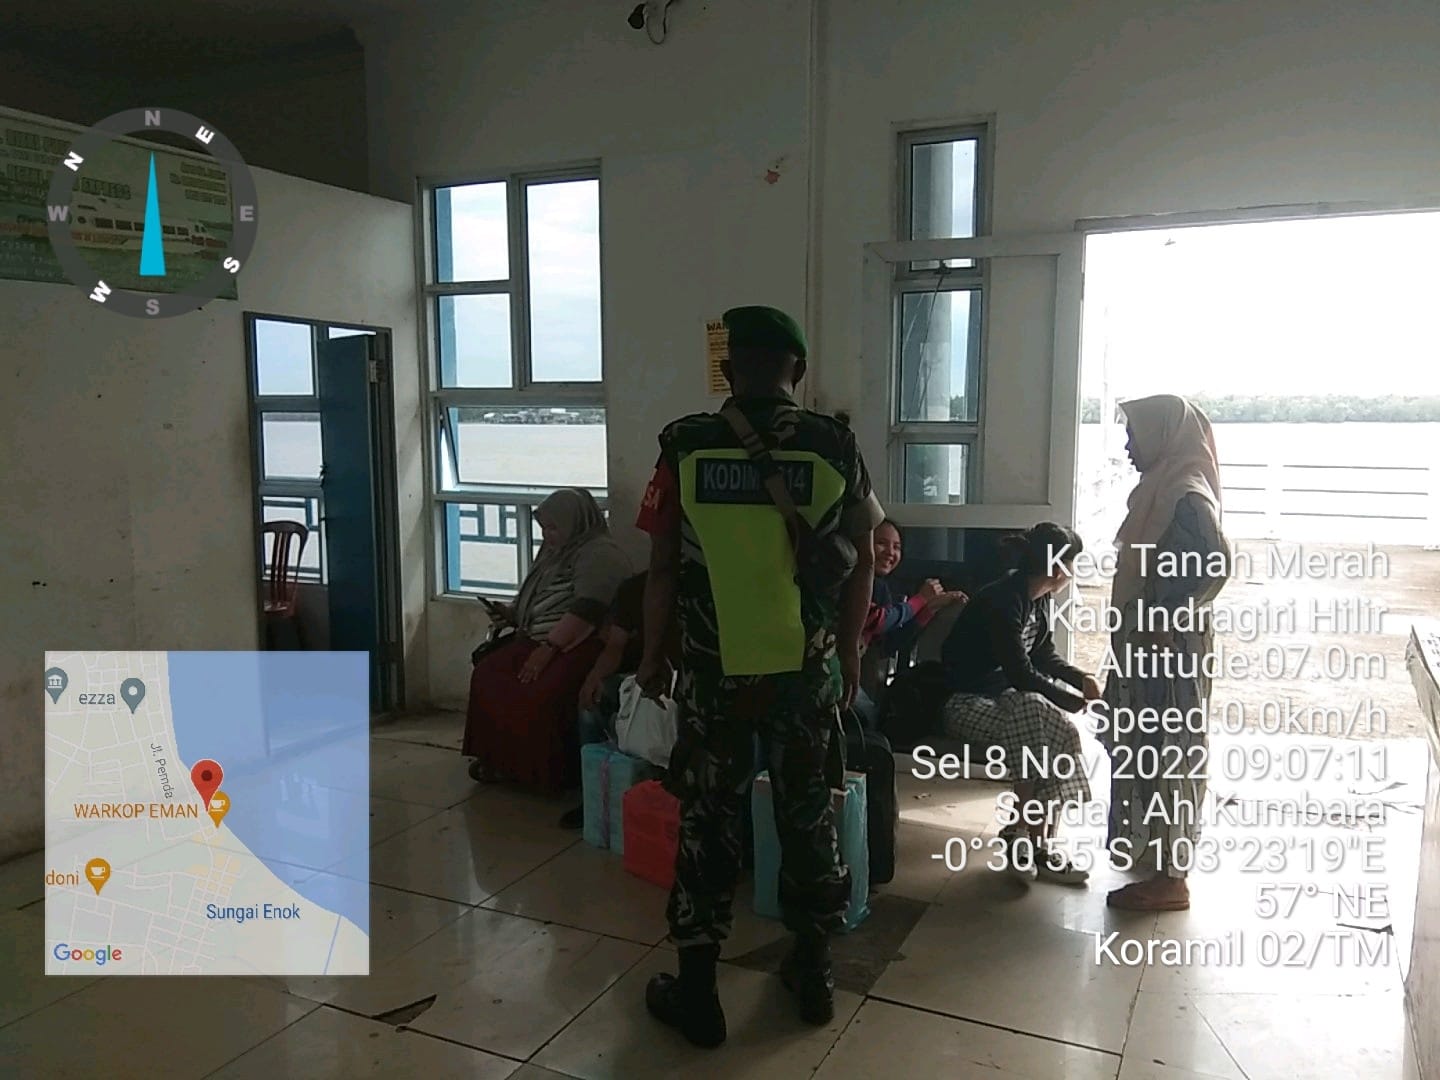 Anggota Koramil 02/TM Laksanakan Himbauan Protokol kesehatan di Pelabuhan